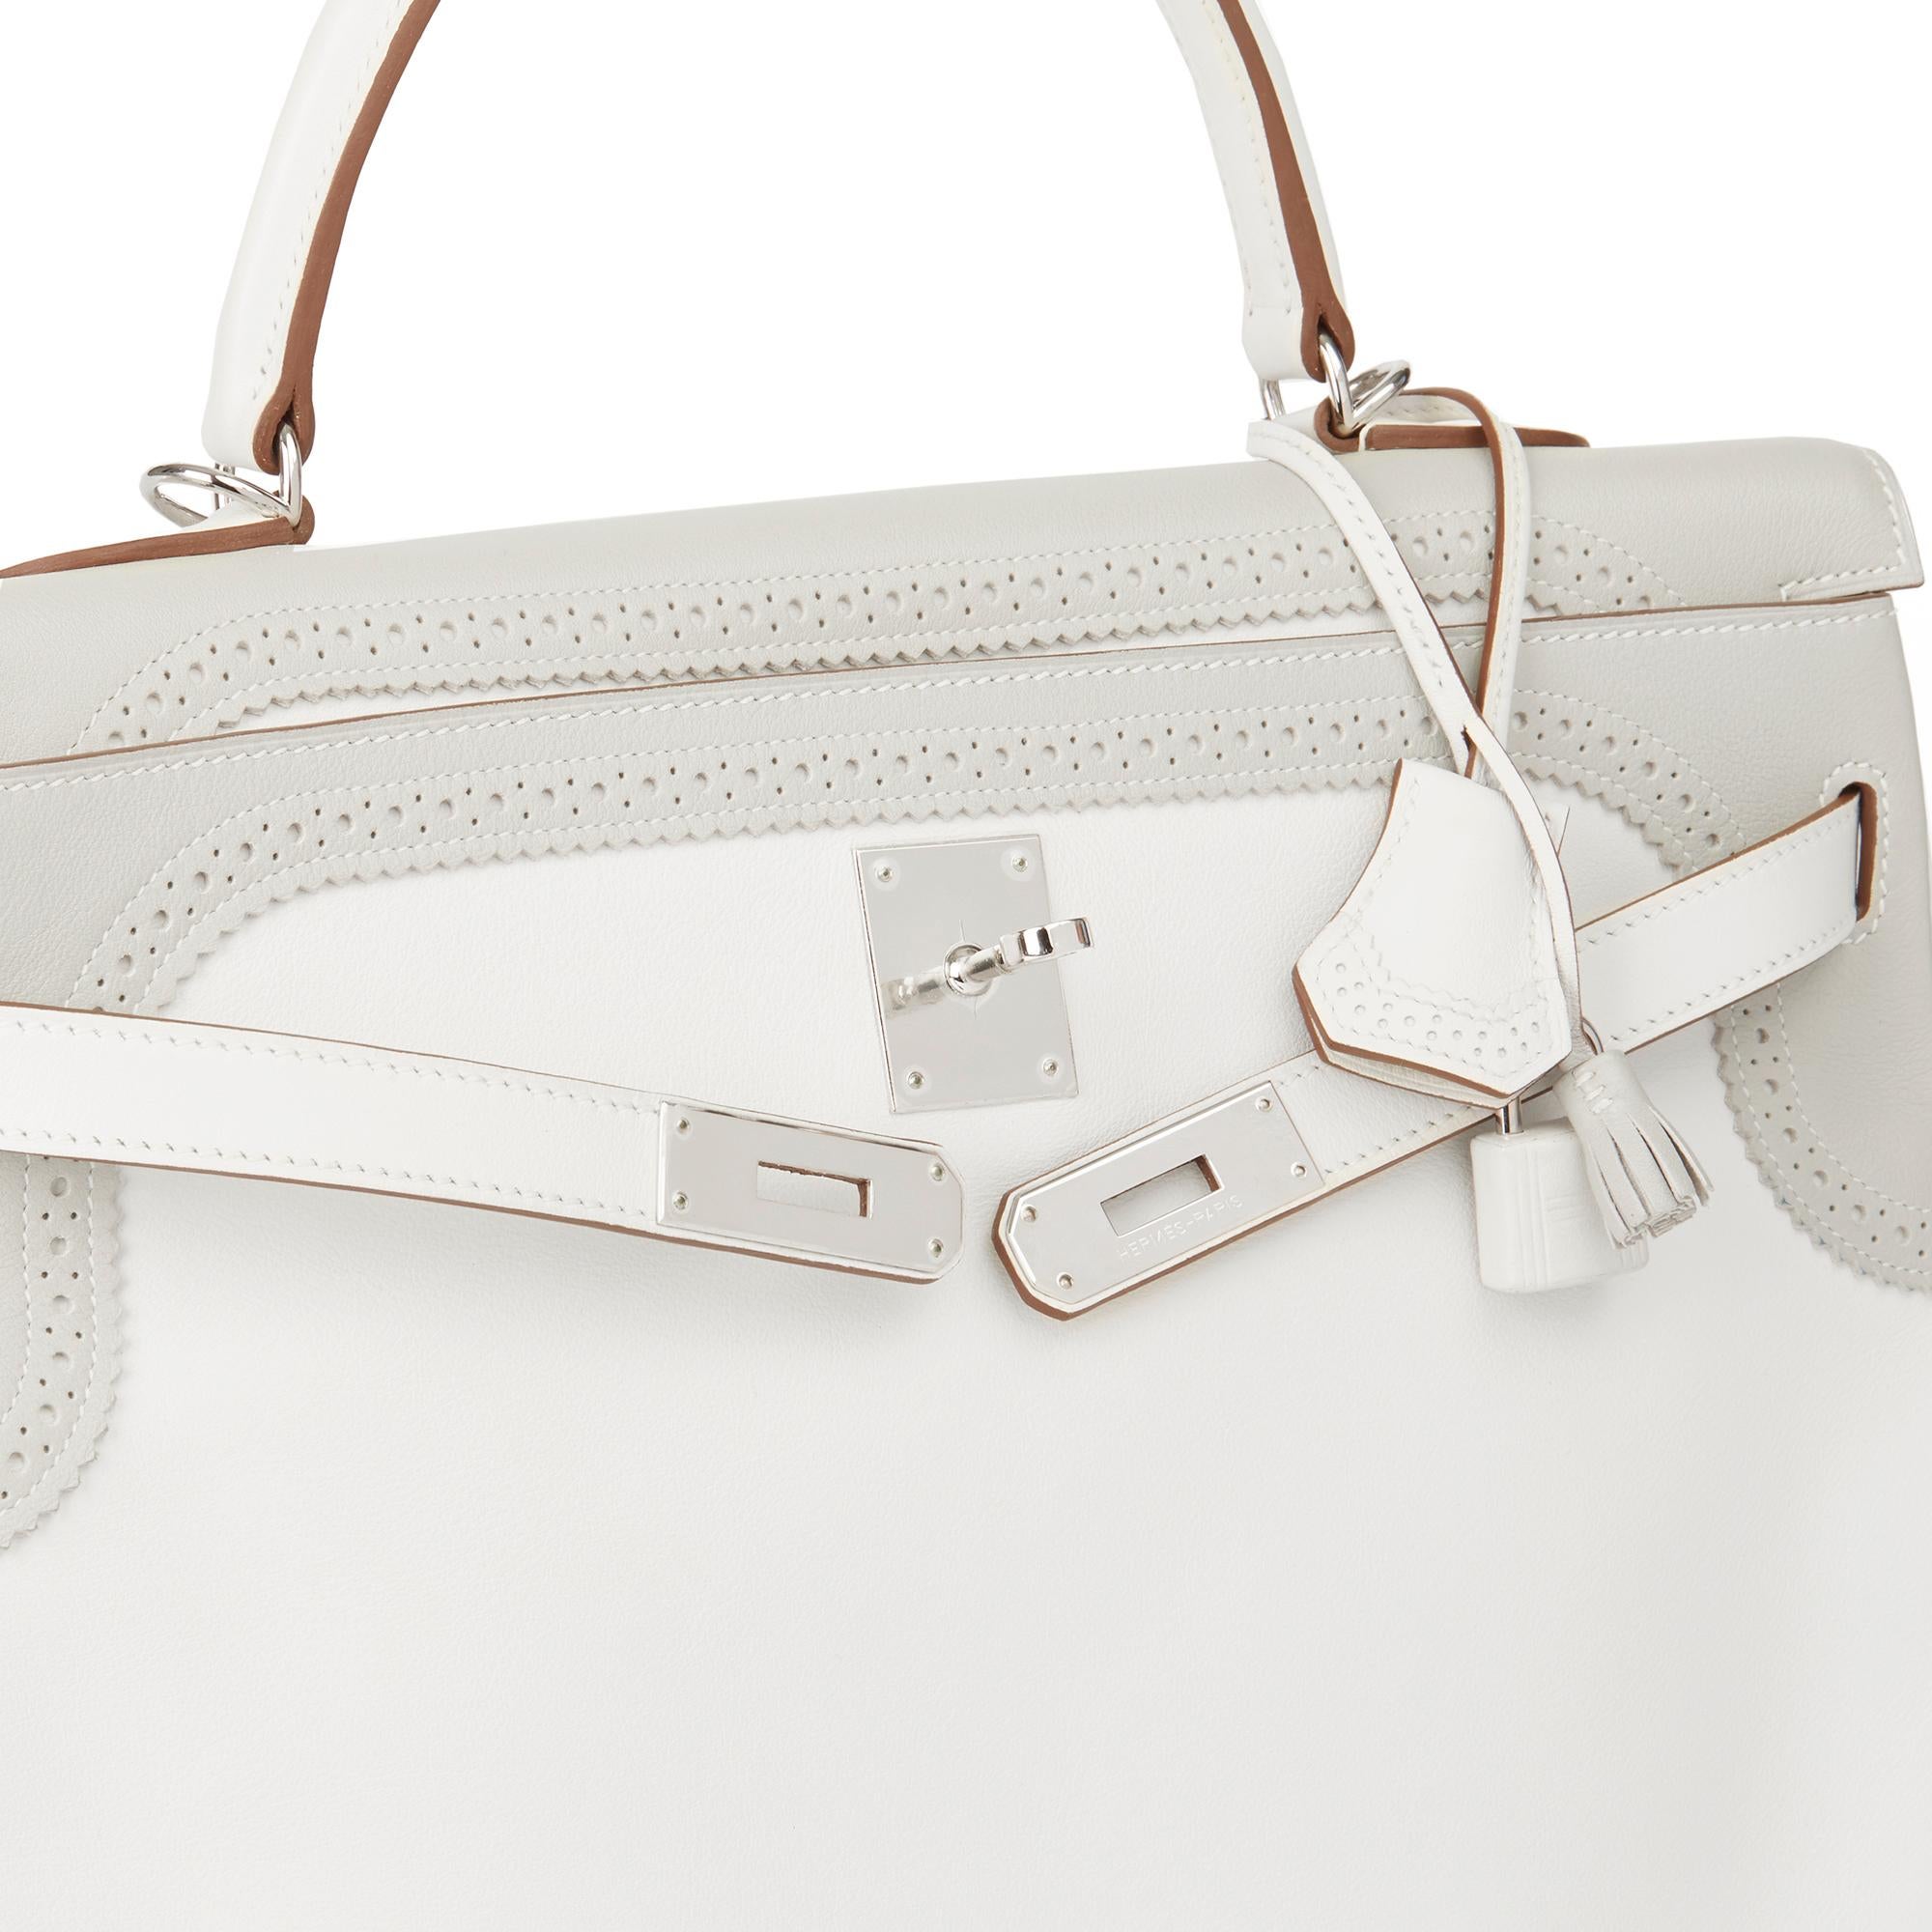 2012 Hermès Blanc & Gris Perle Swift Leather Ghillies Kelly 35cm Retourne 3